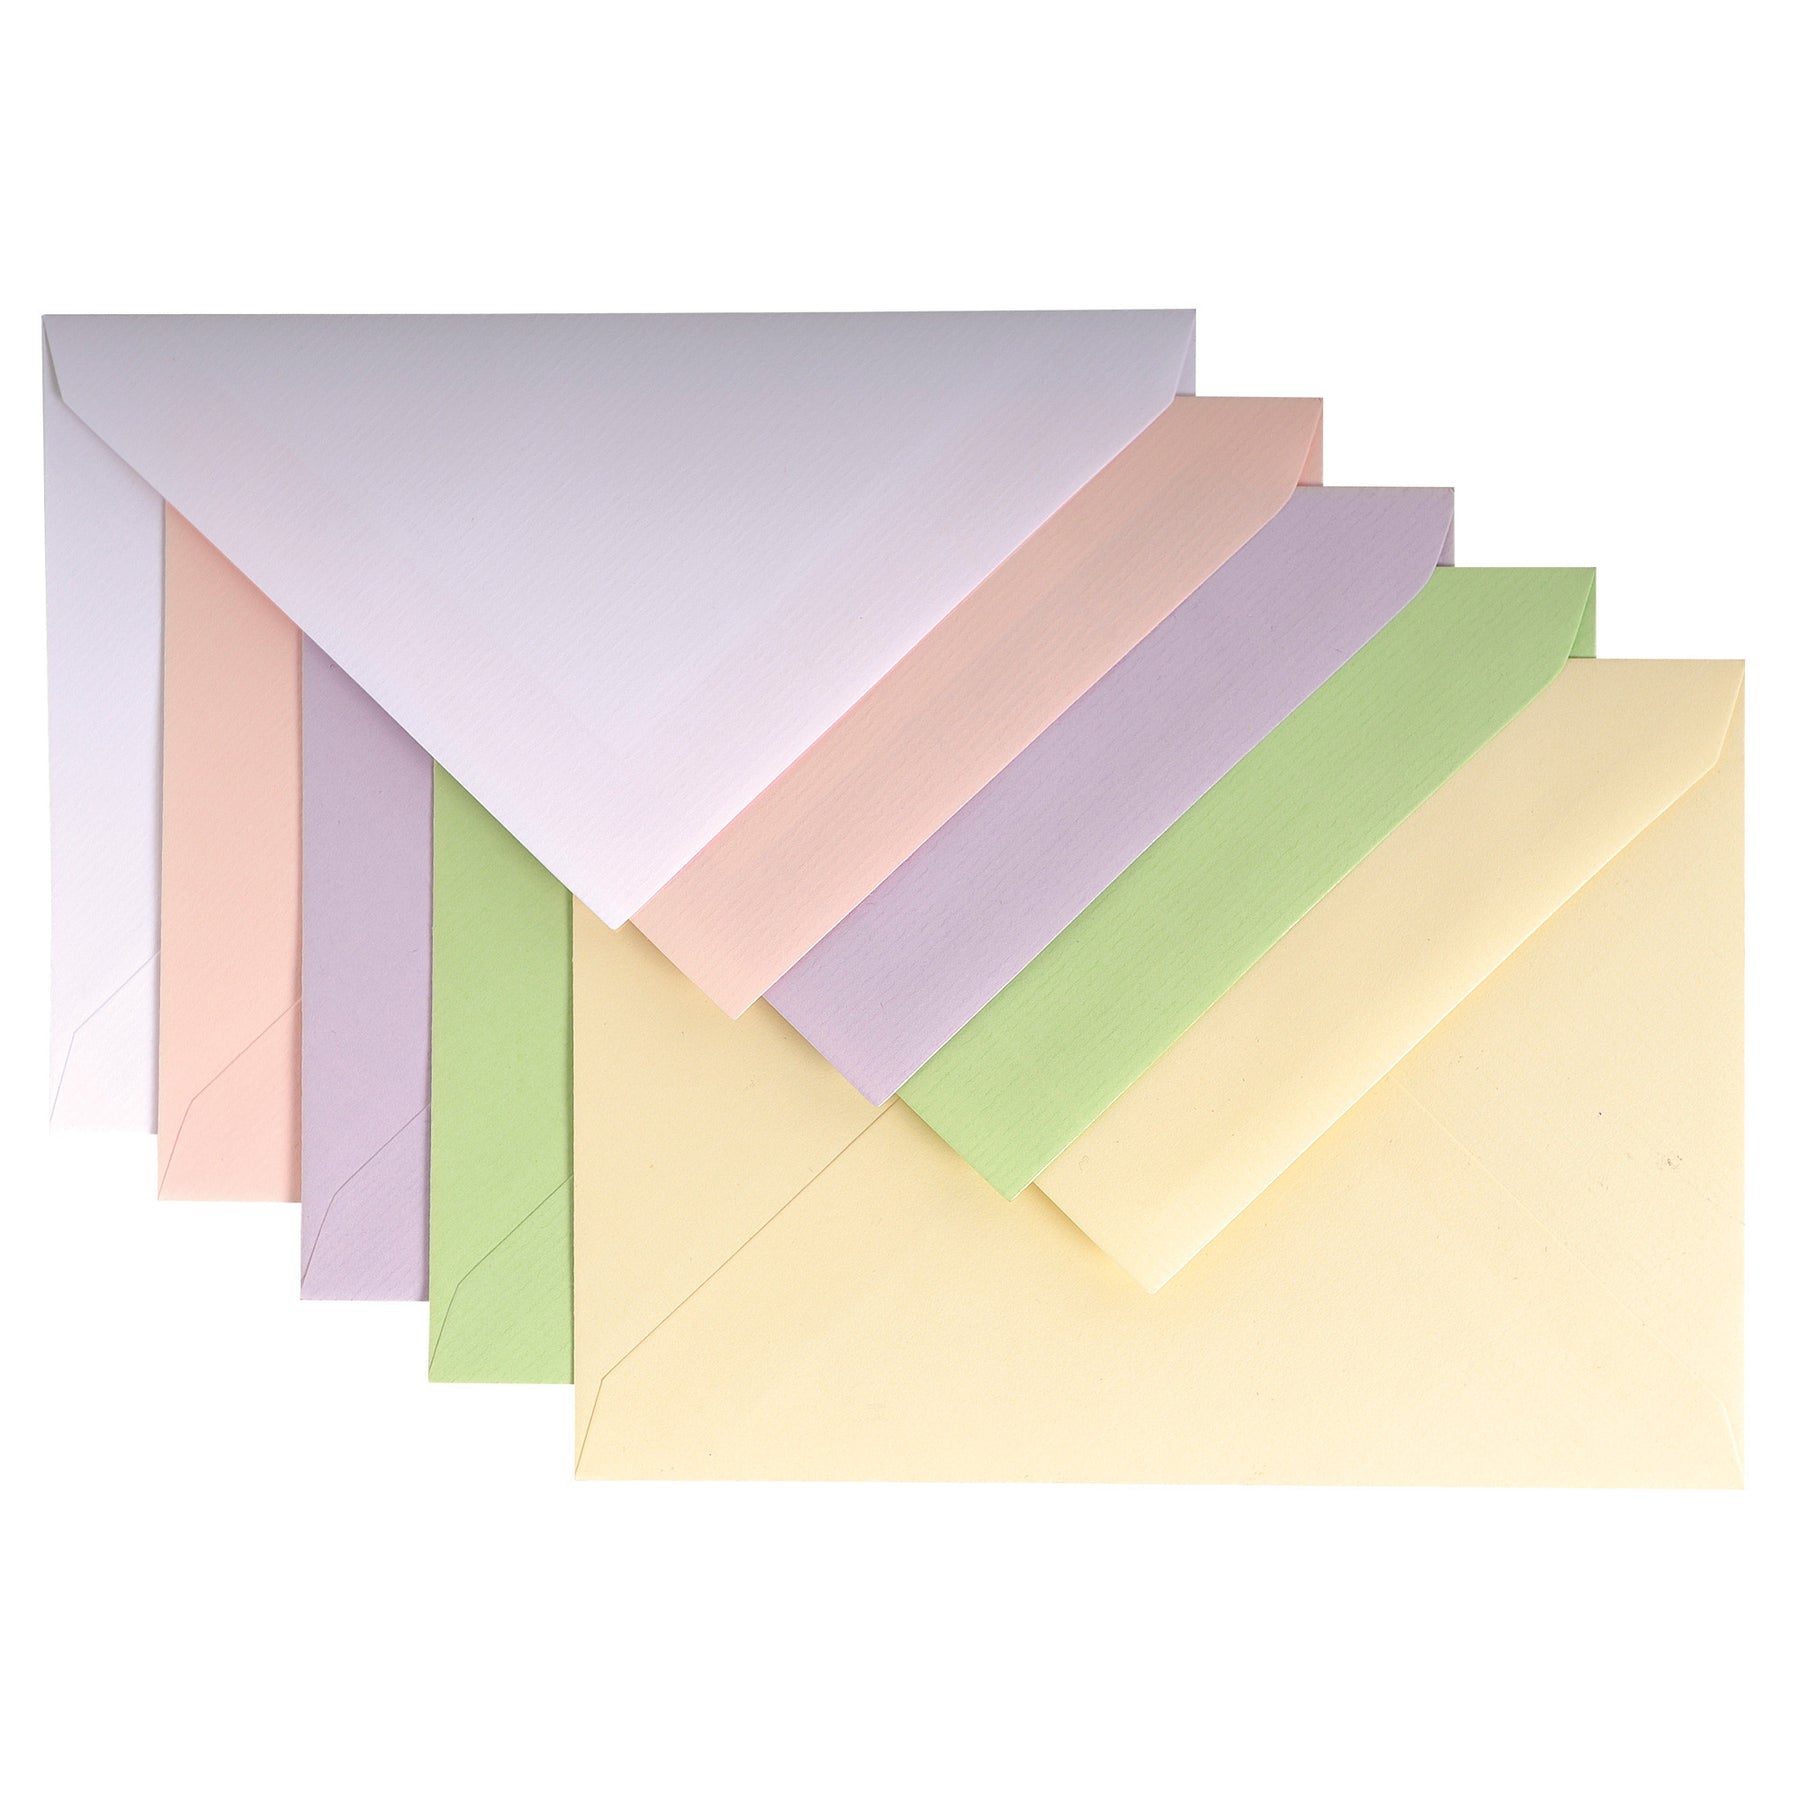 G. Lalo Verge de France Small Gummed Envelopes (25 Pack)